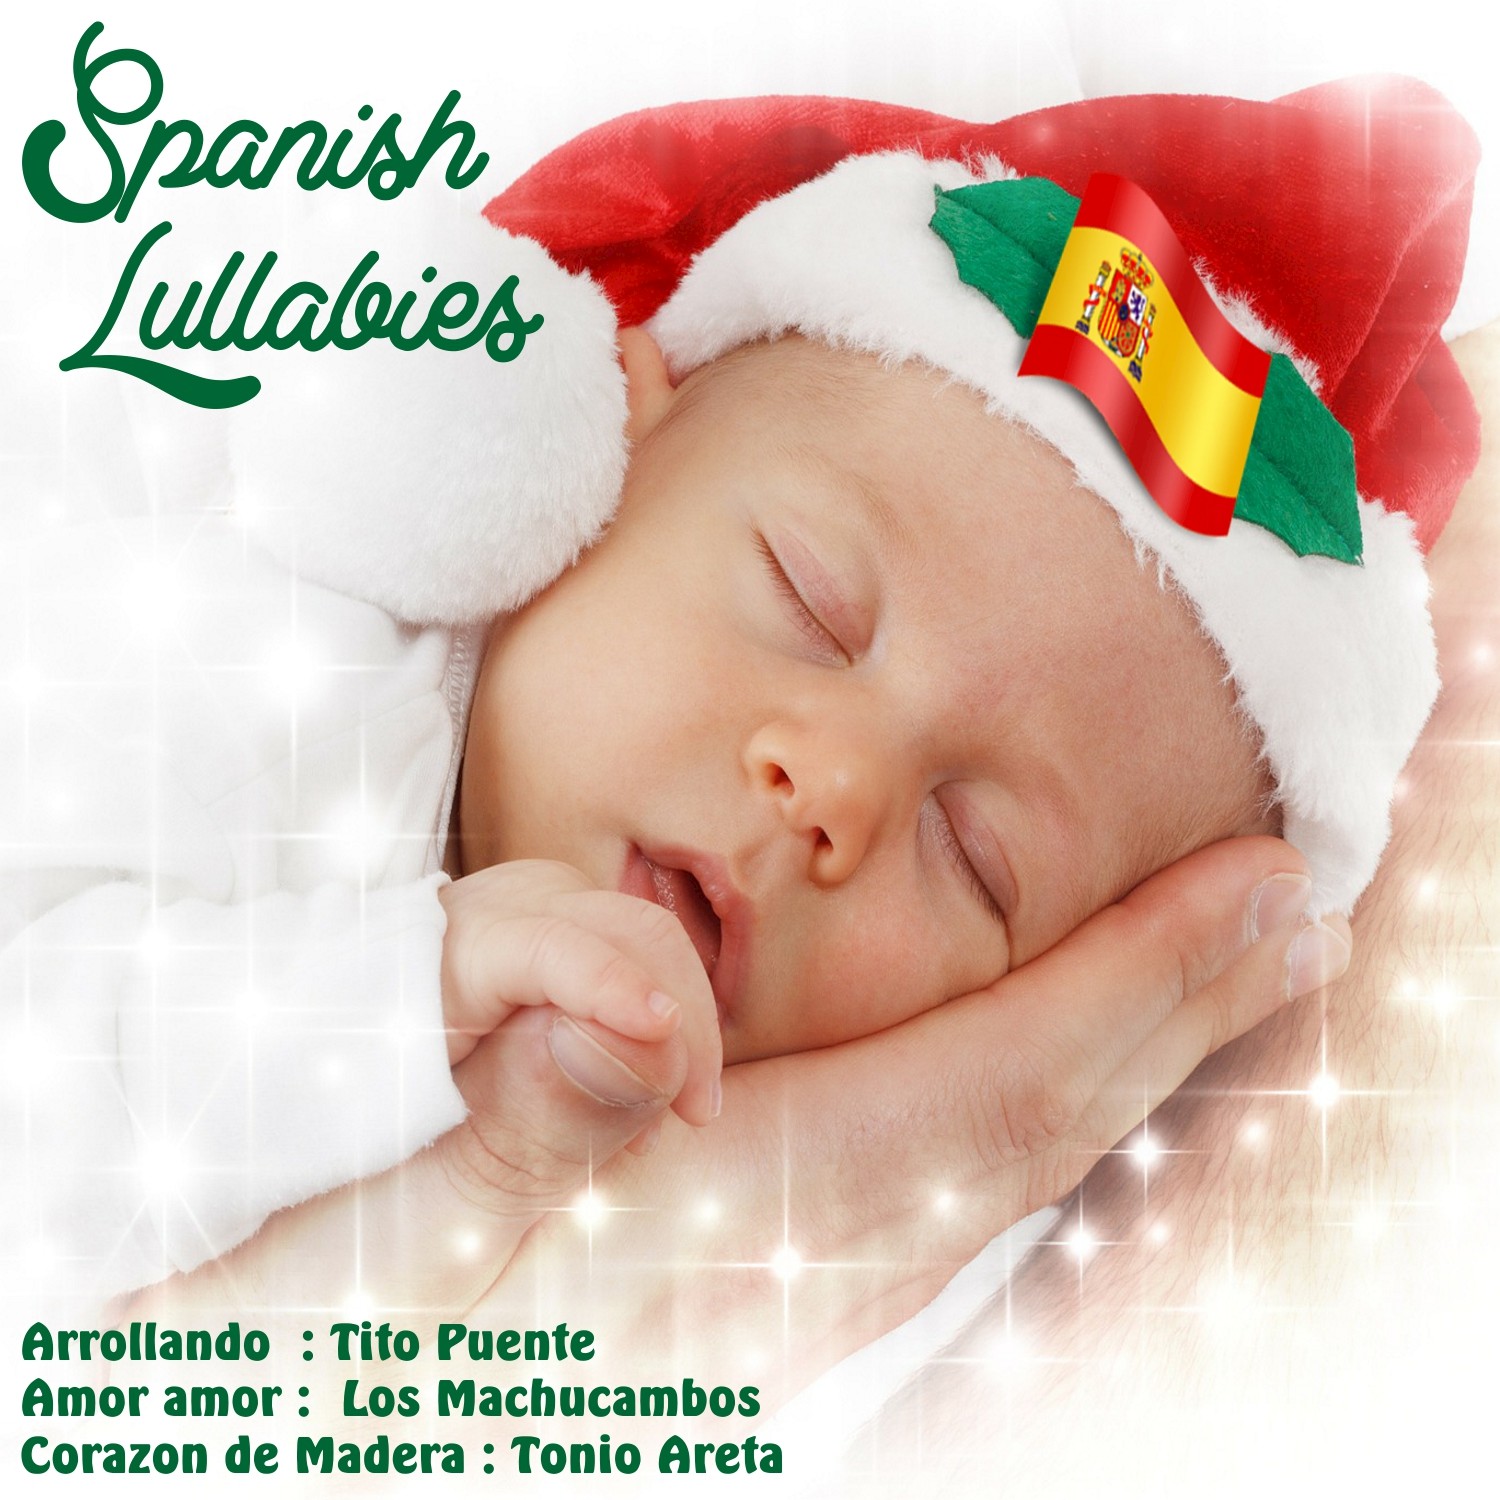 Spanish Lullabies